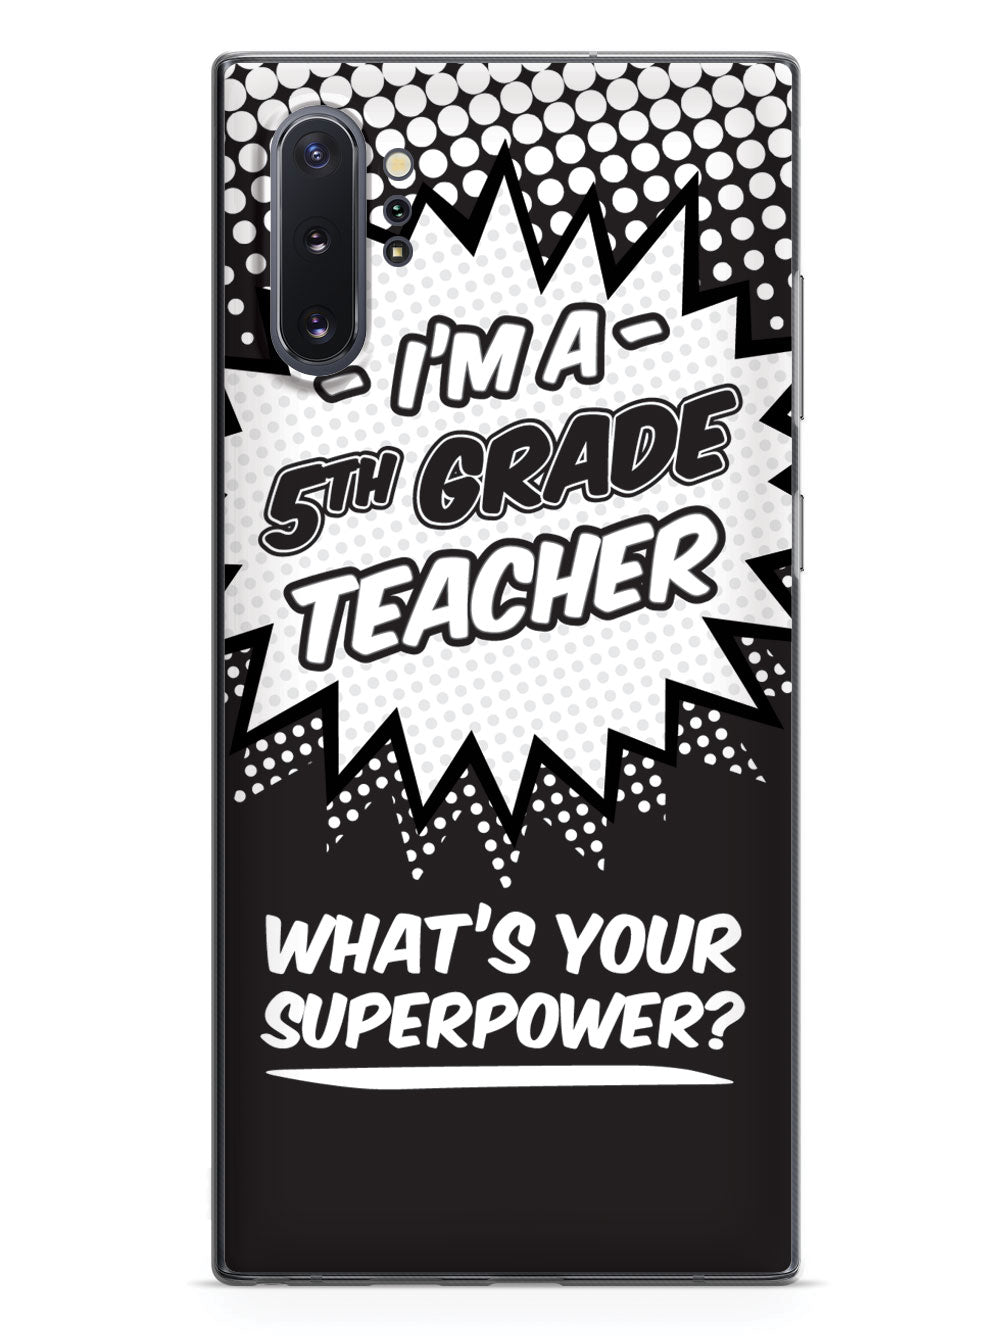 5th Grade Teacher - What's Your Superpower? Case